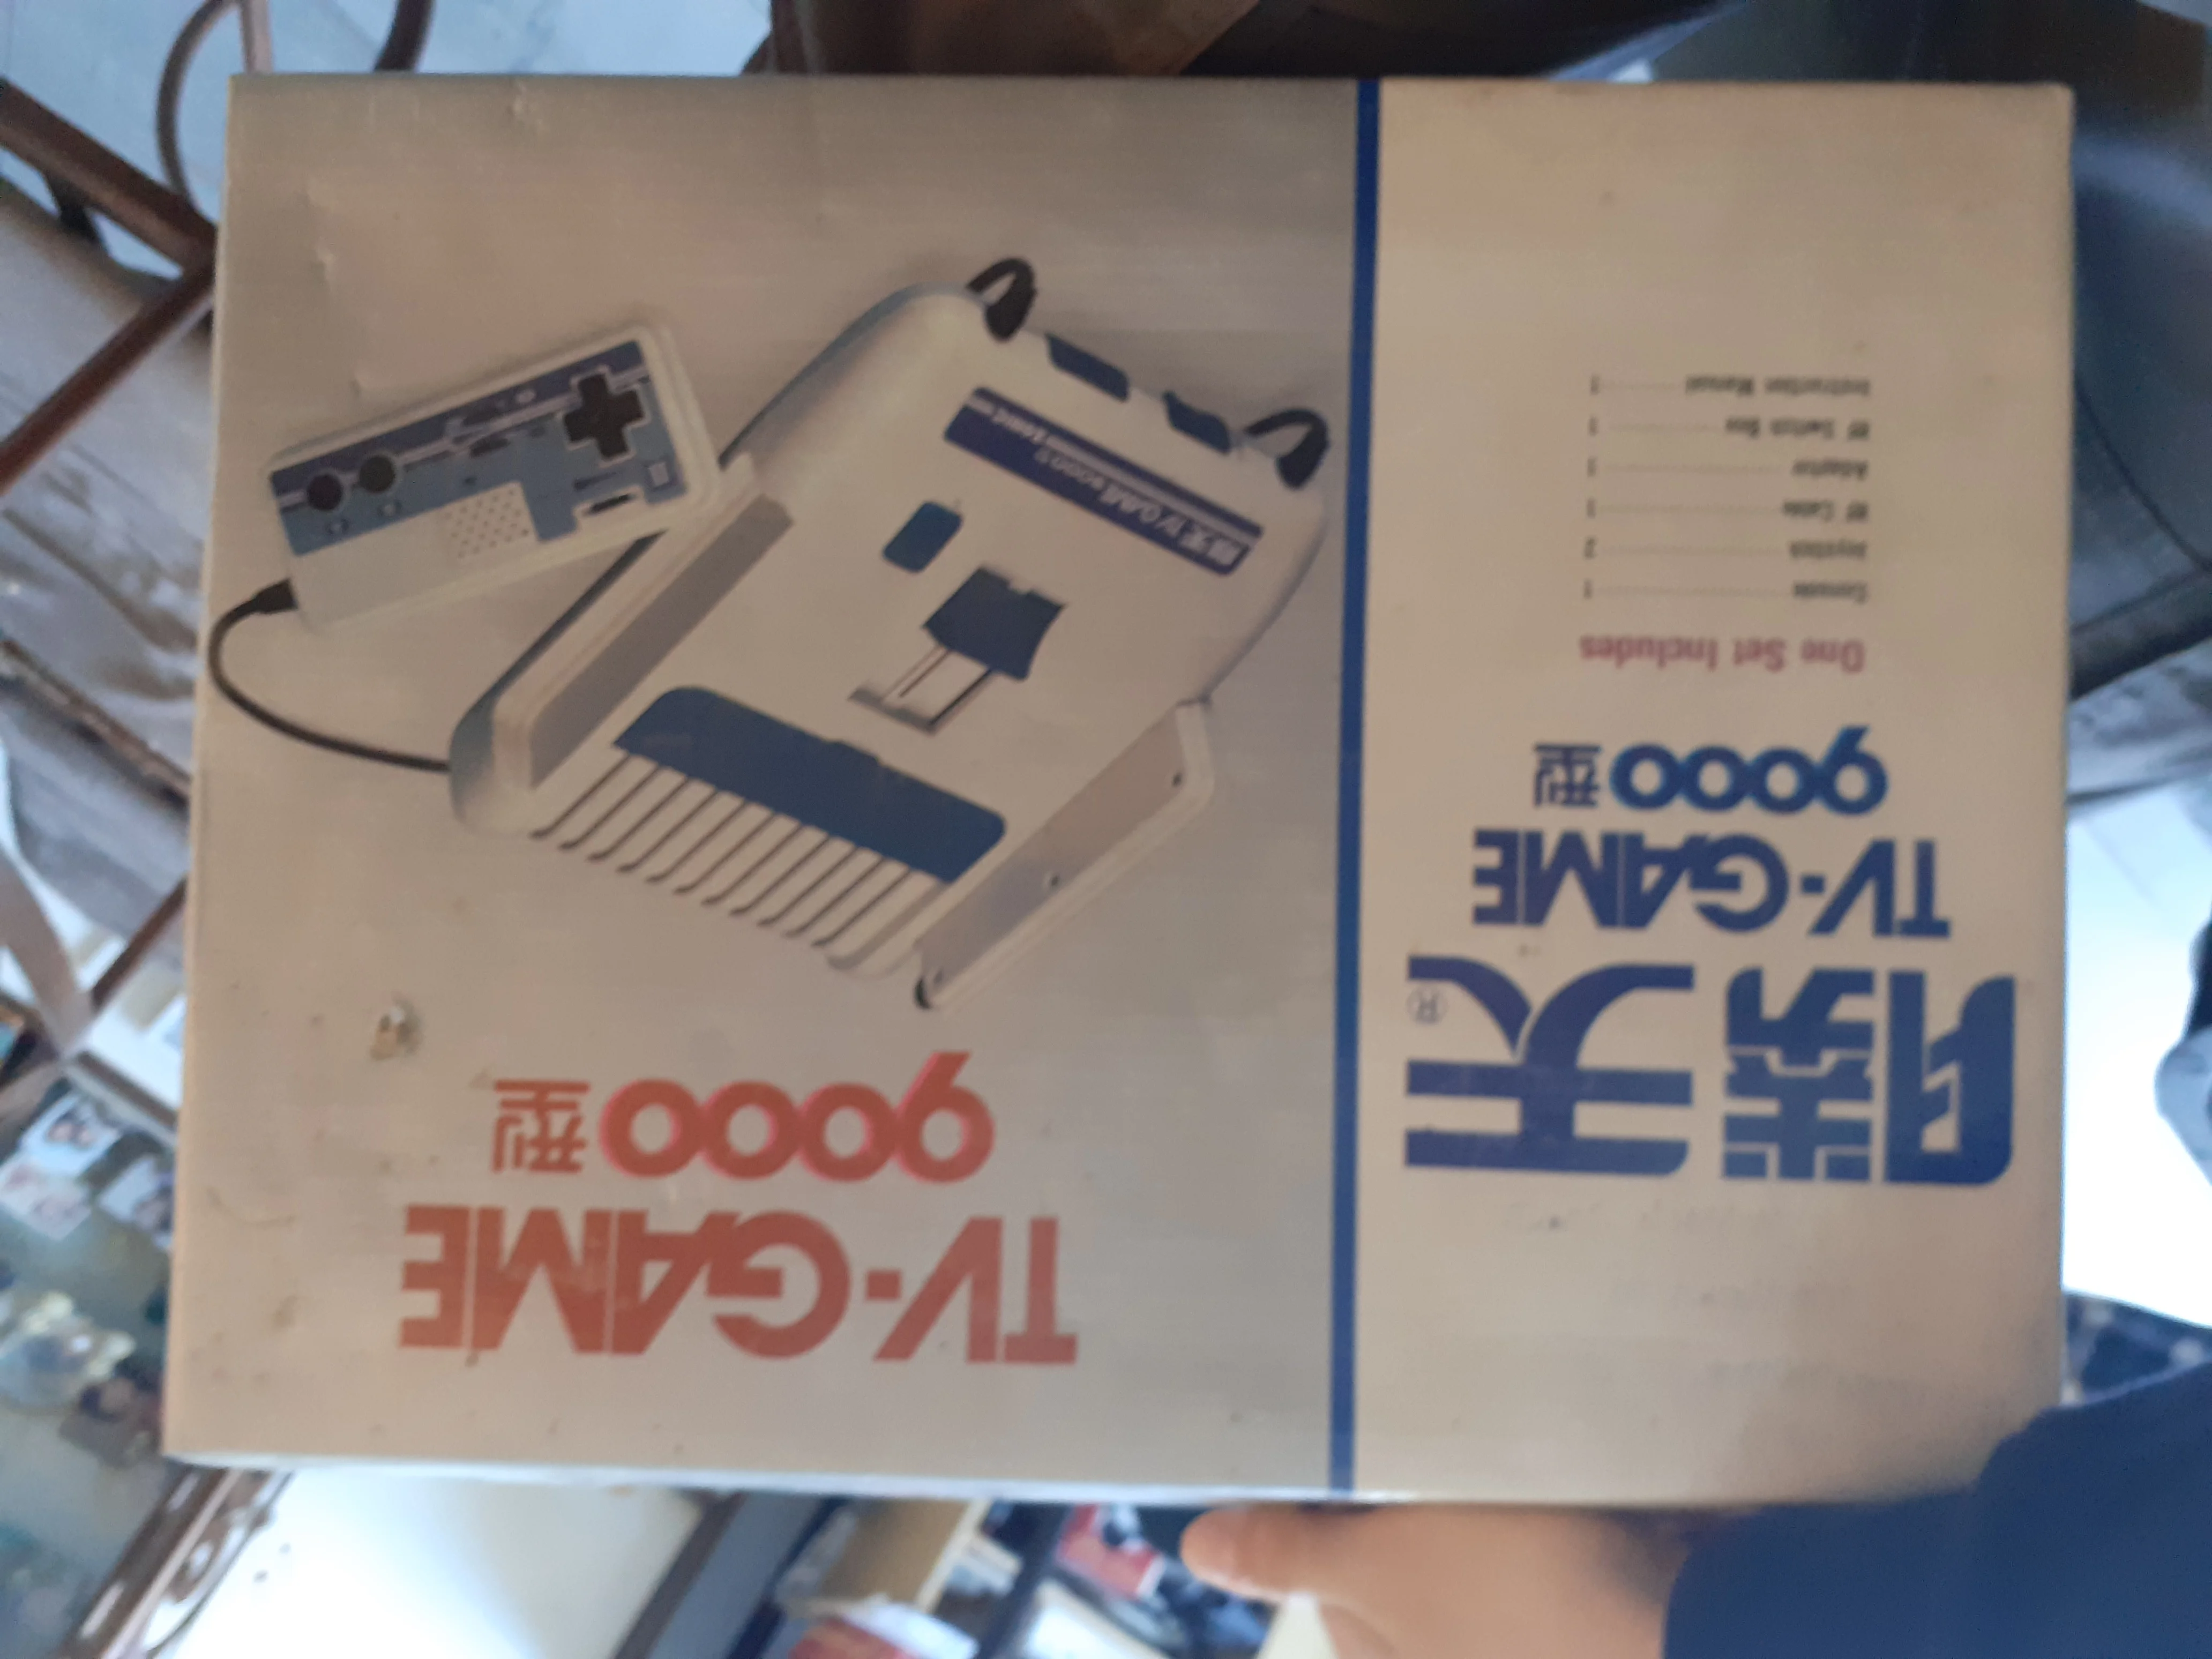  Famiclone TV-GAME 9000 Console